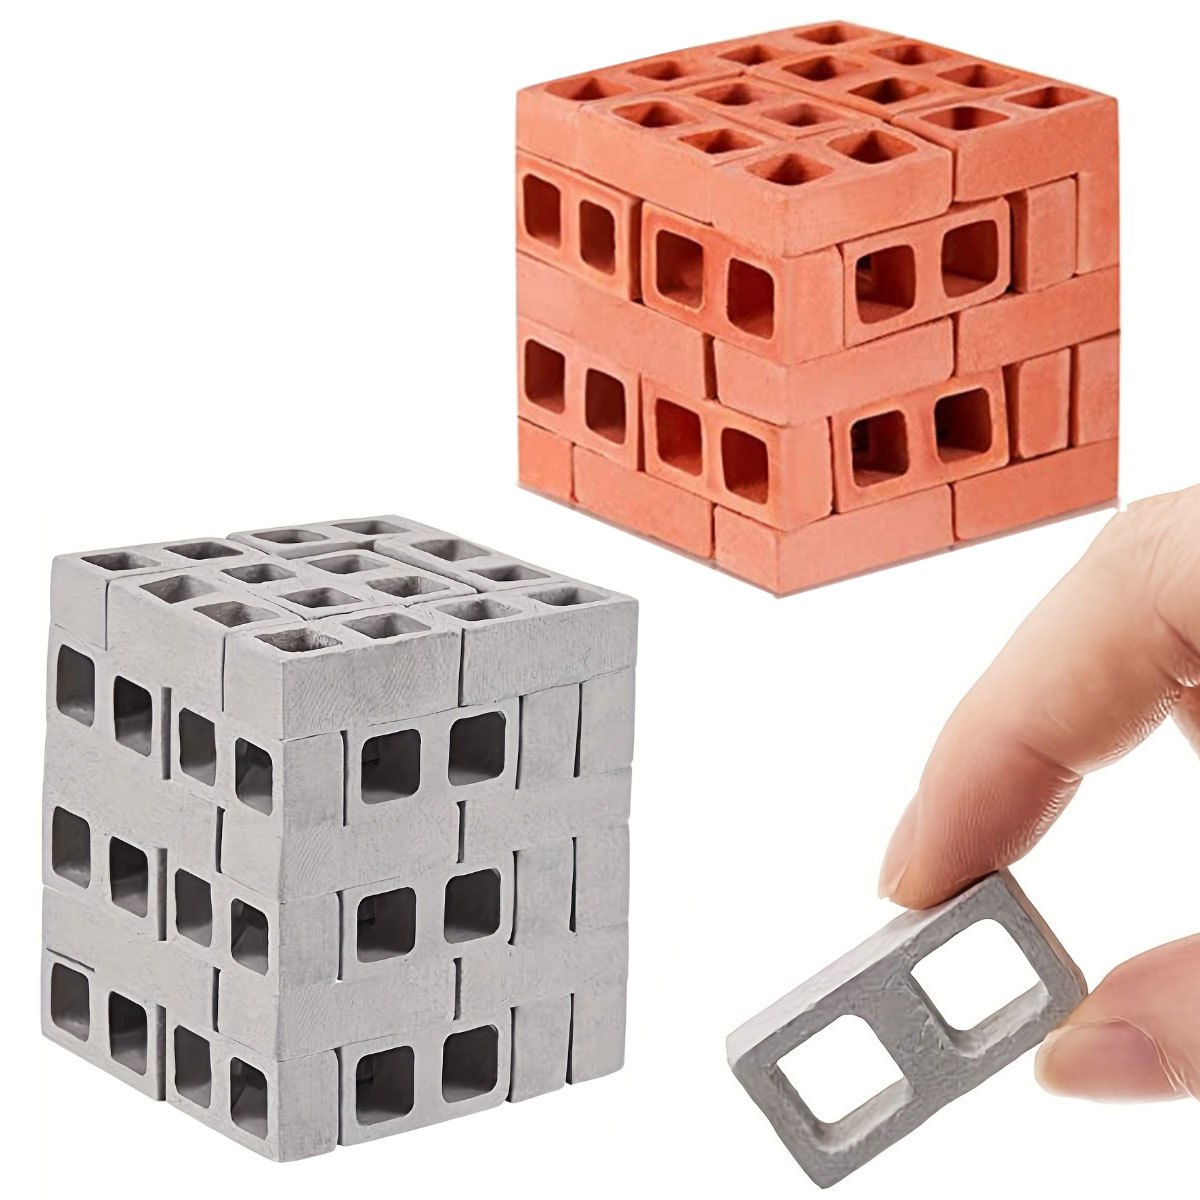 60 Packs 1/12 Scale Concrete Miniature Bricks Dollhouse Accessories, Size: Small, Gray